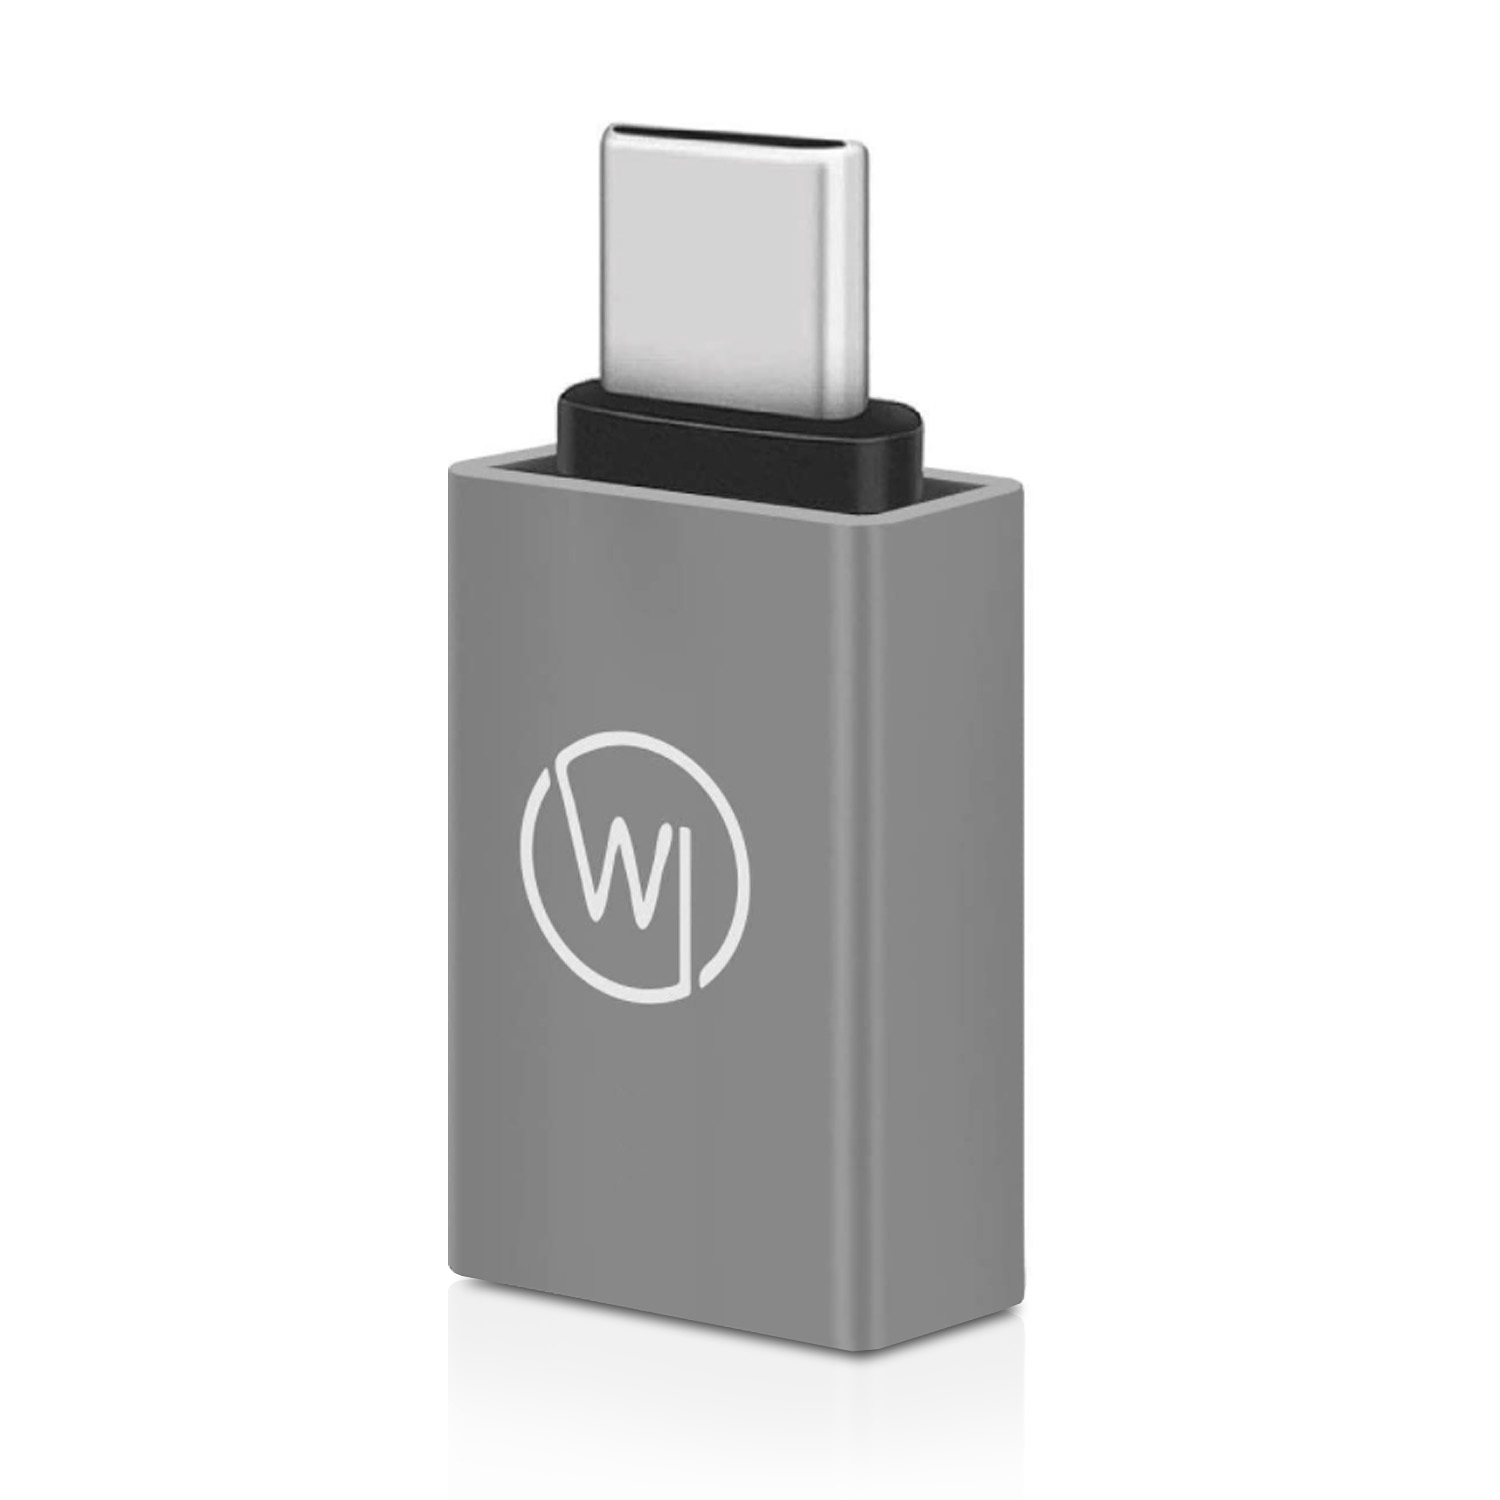 Jelly-Comb, Nulaxy Logitech, Laptop HD Adapter USB-C USB und Universal Teaisiy, für mit WICKED für Webcams CHILI Adapter